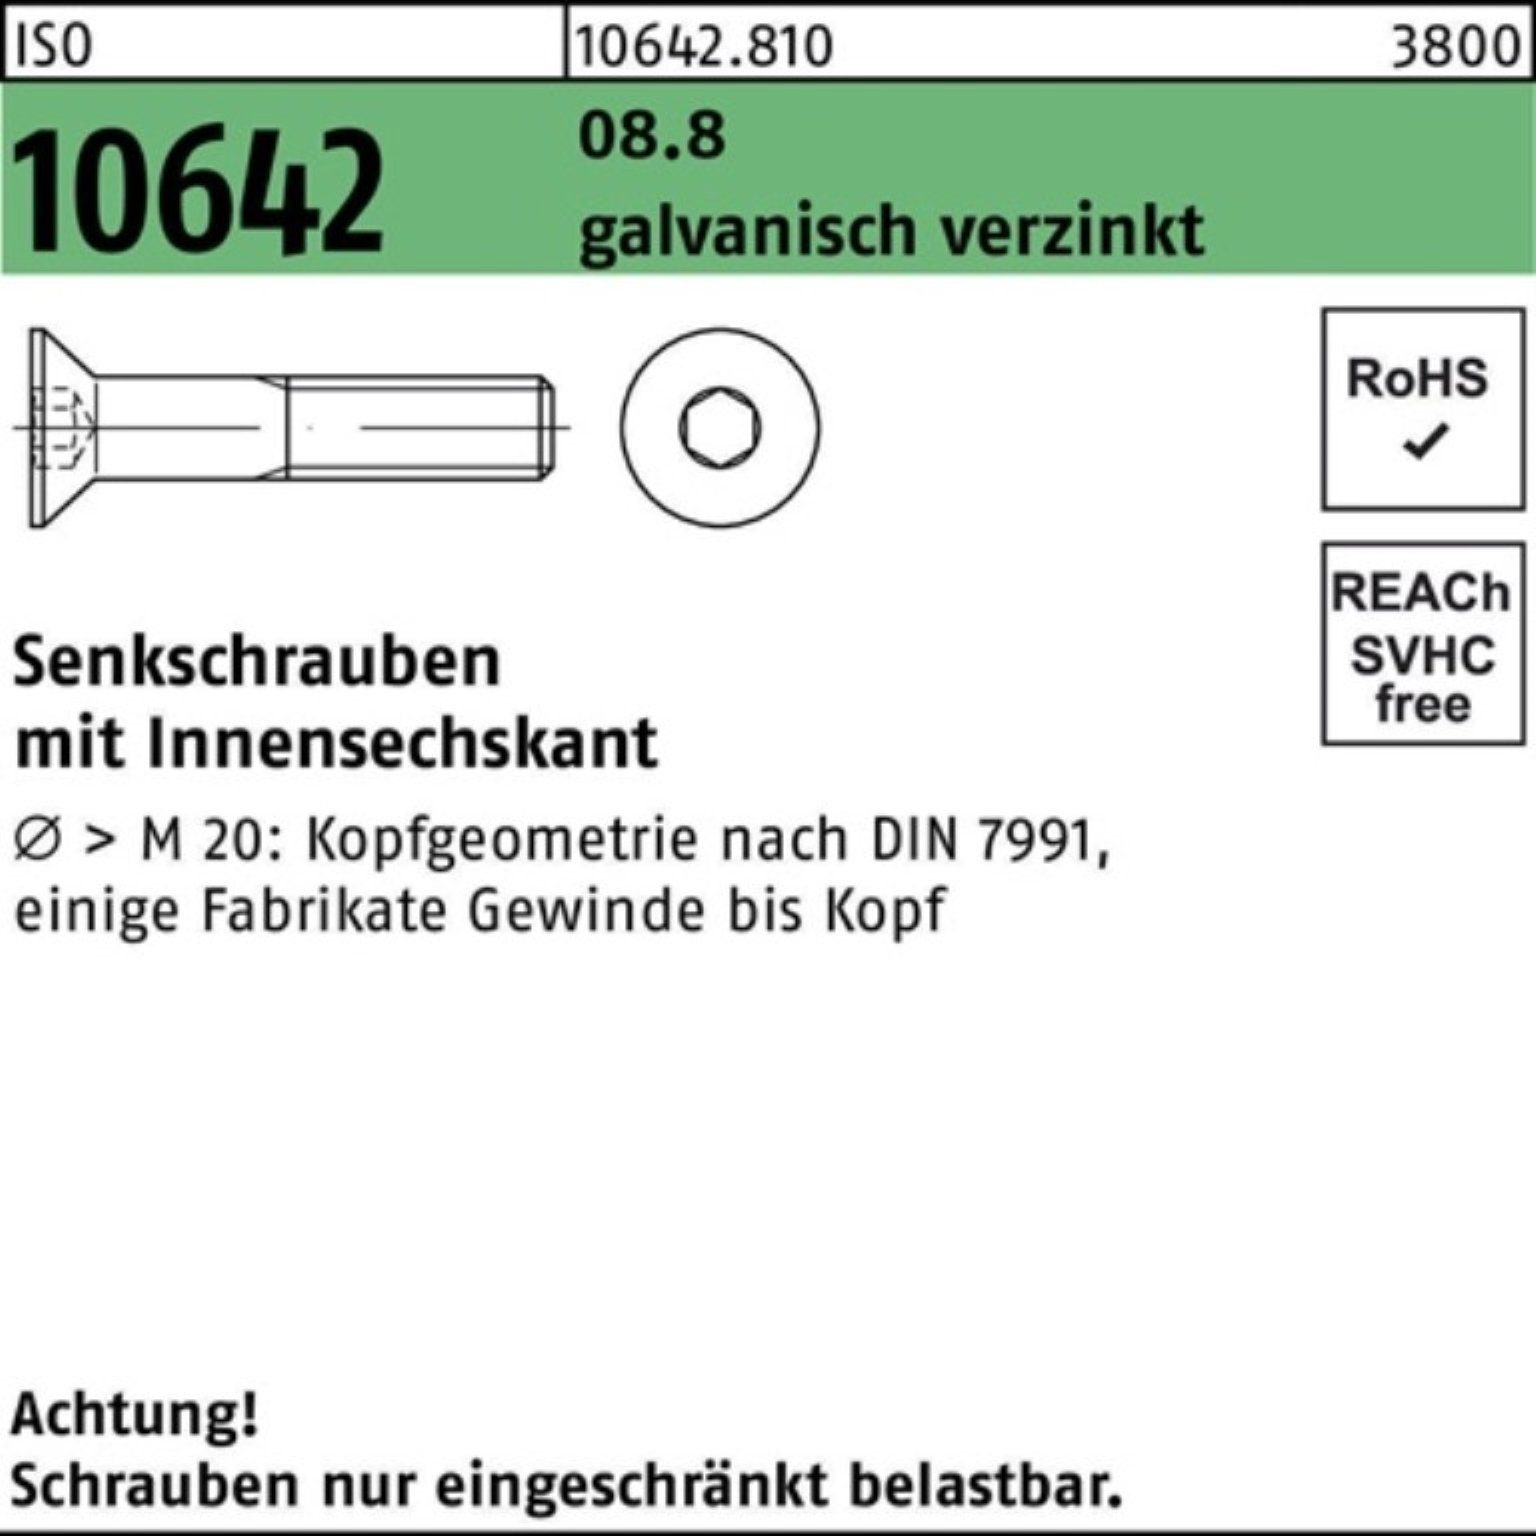 Reyher Senkschraube 500er 10642 M6x 8.8 ISO Pack Senkschraube Innen-6kt 500 14 galv.verz